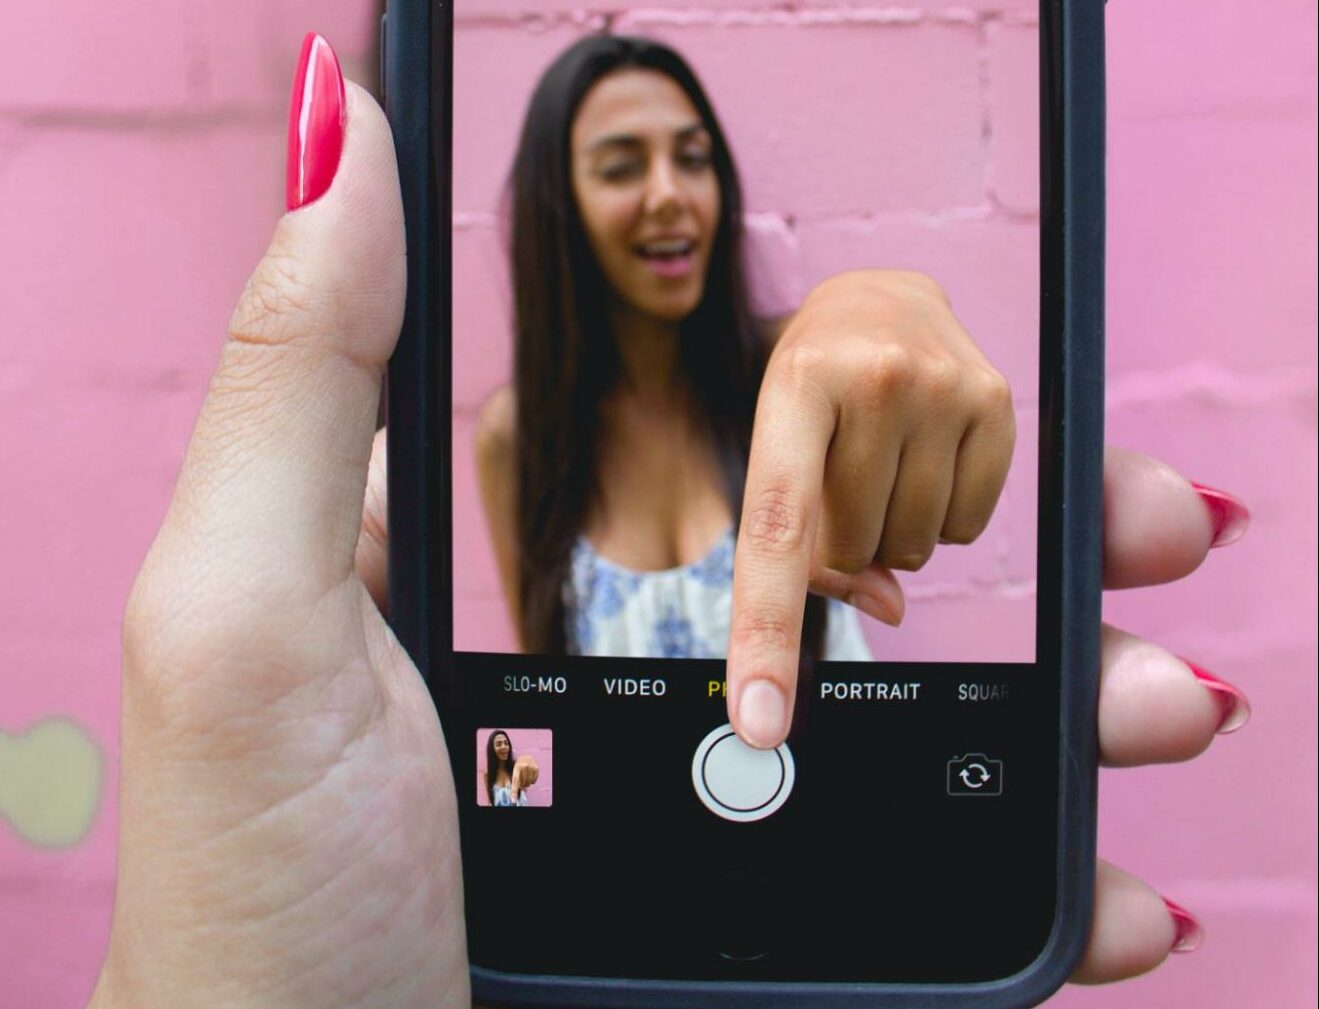 woman reaching through phone optical illusion edit